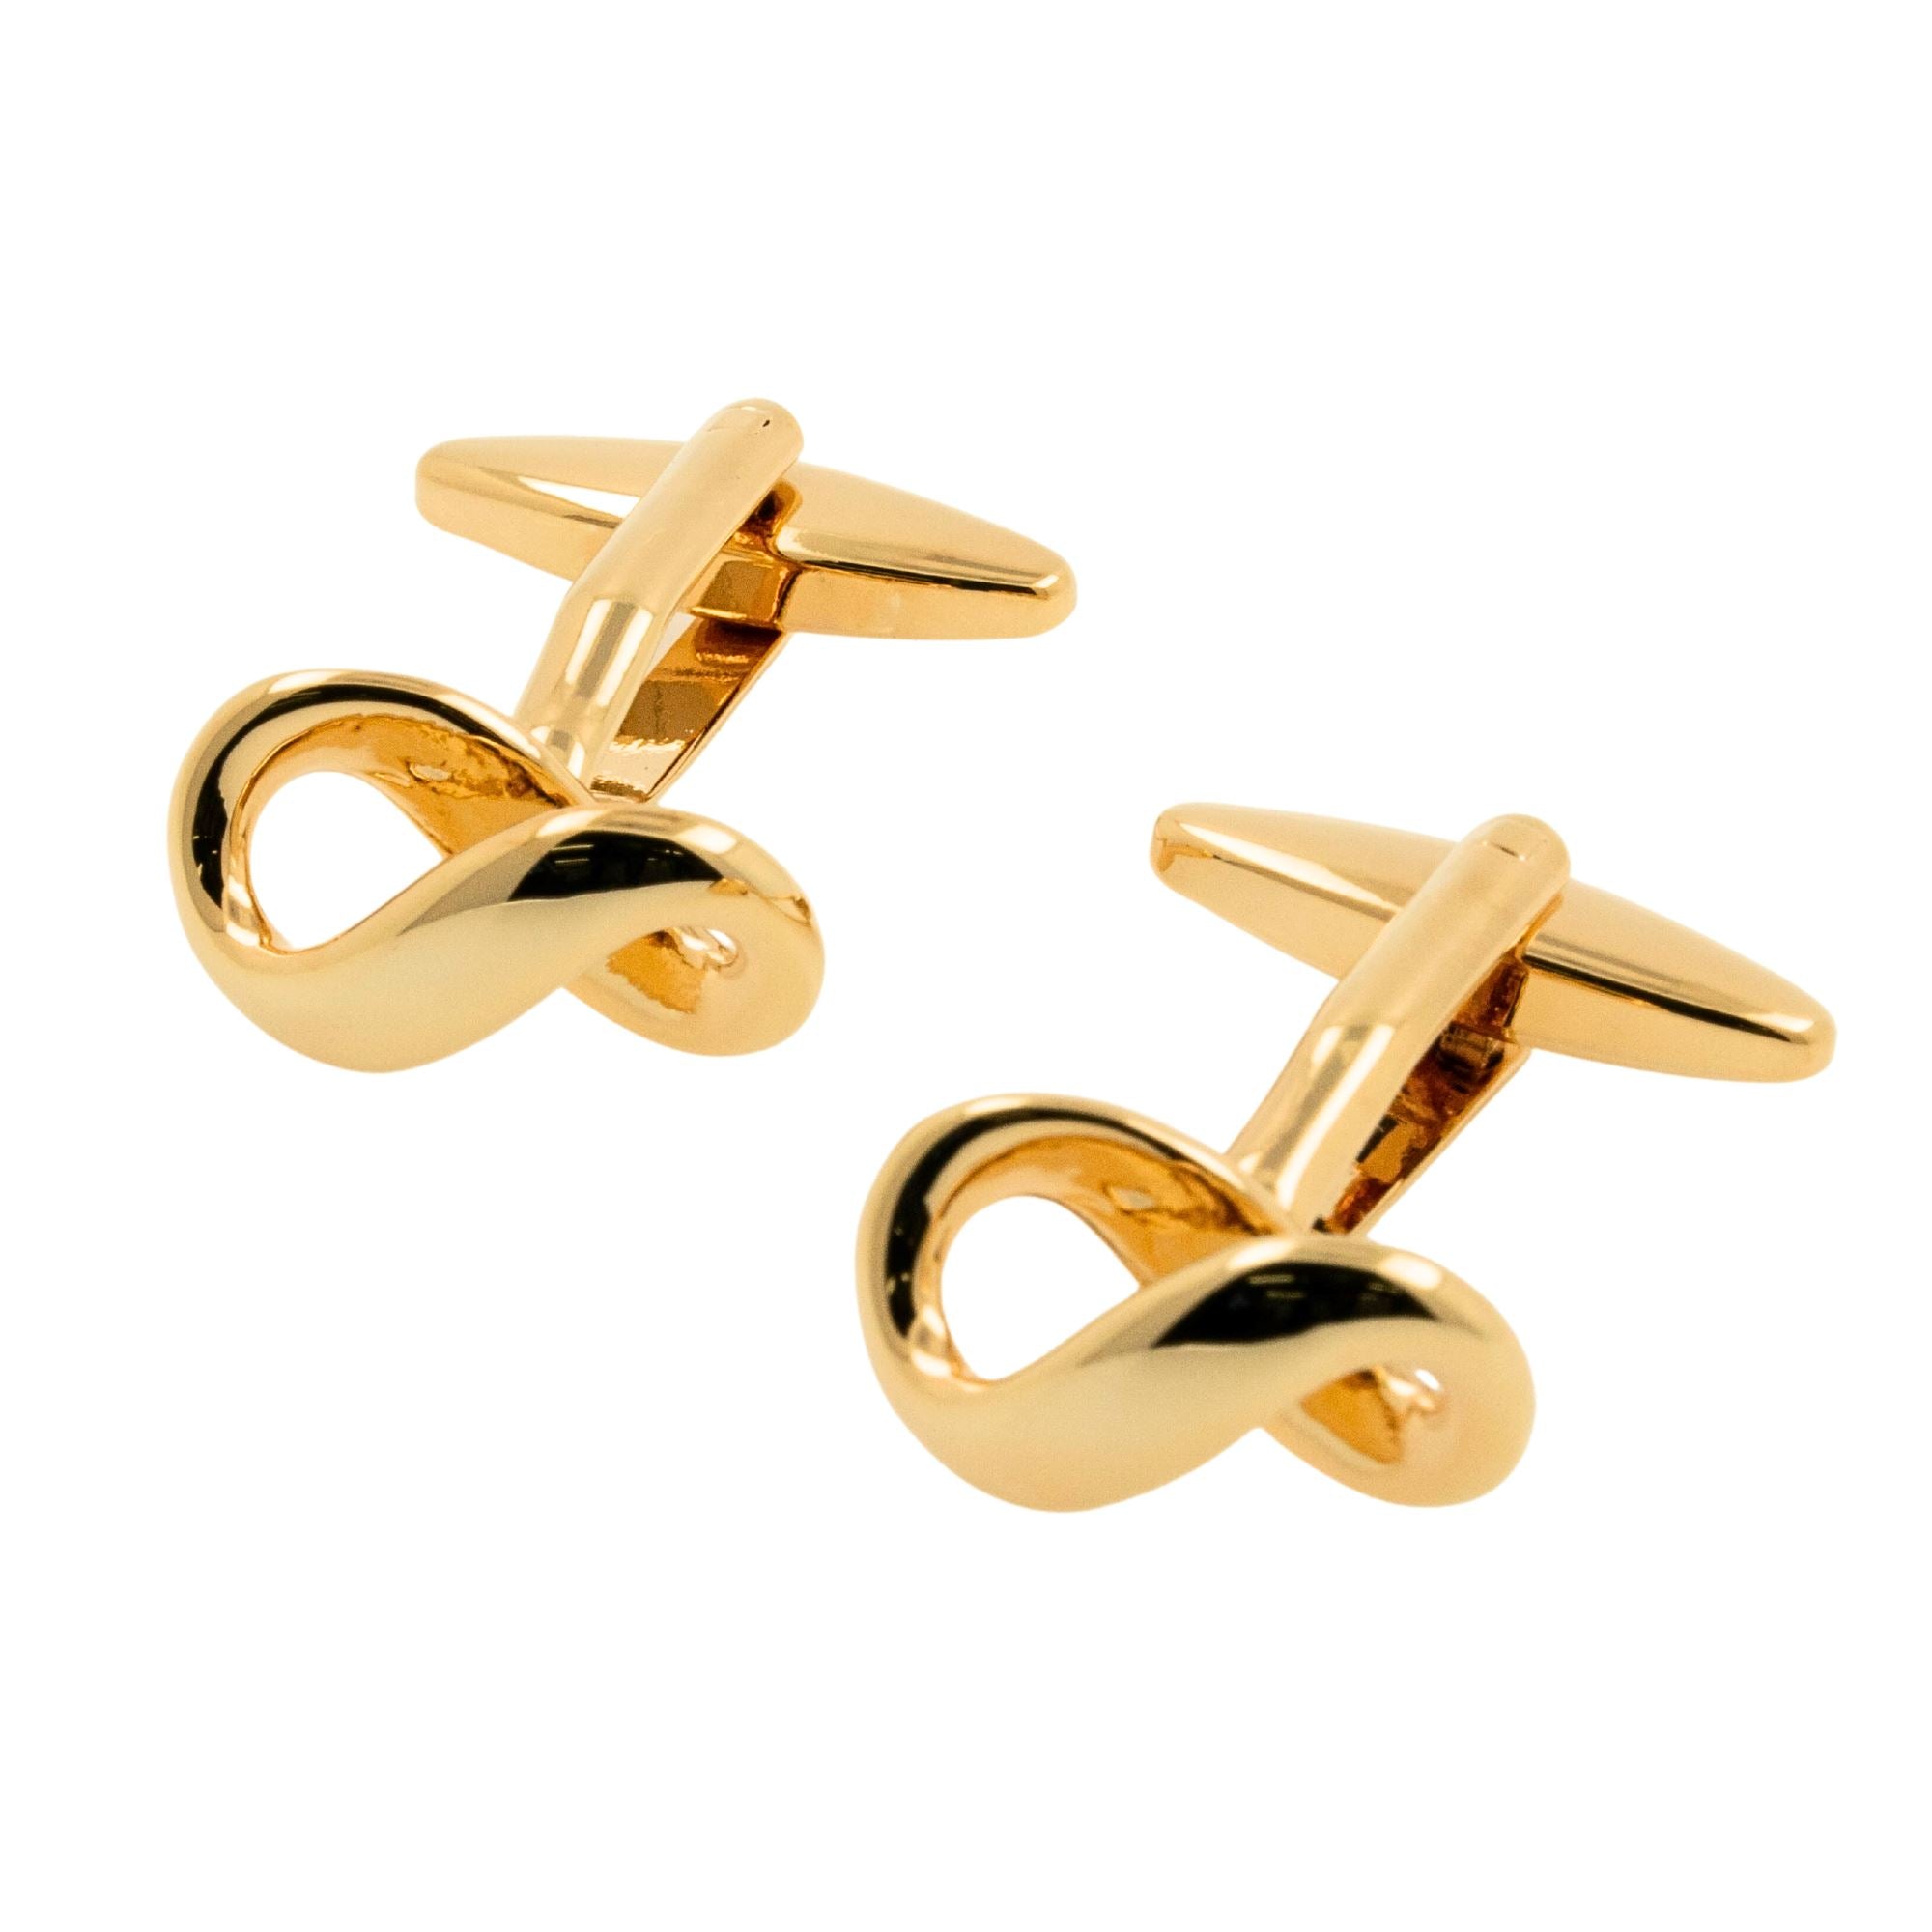 Gold Infinity Symbol Cufflinks Novelty Cufflinks Clinks Australia 